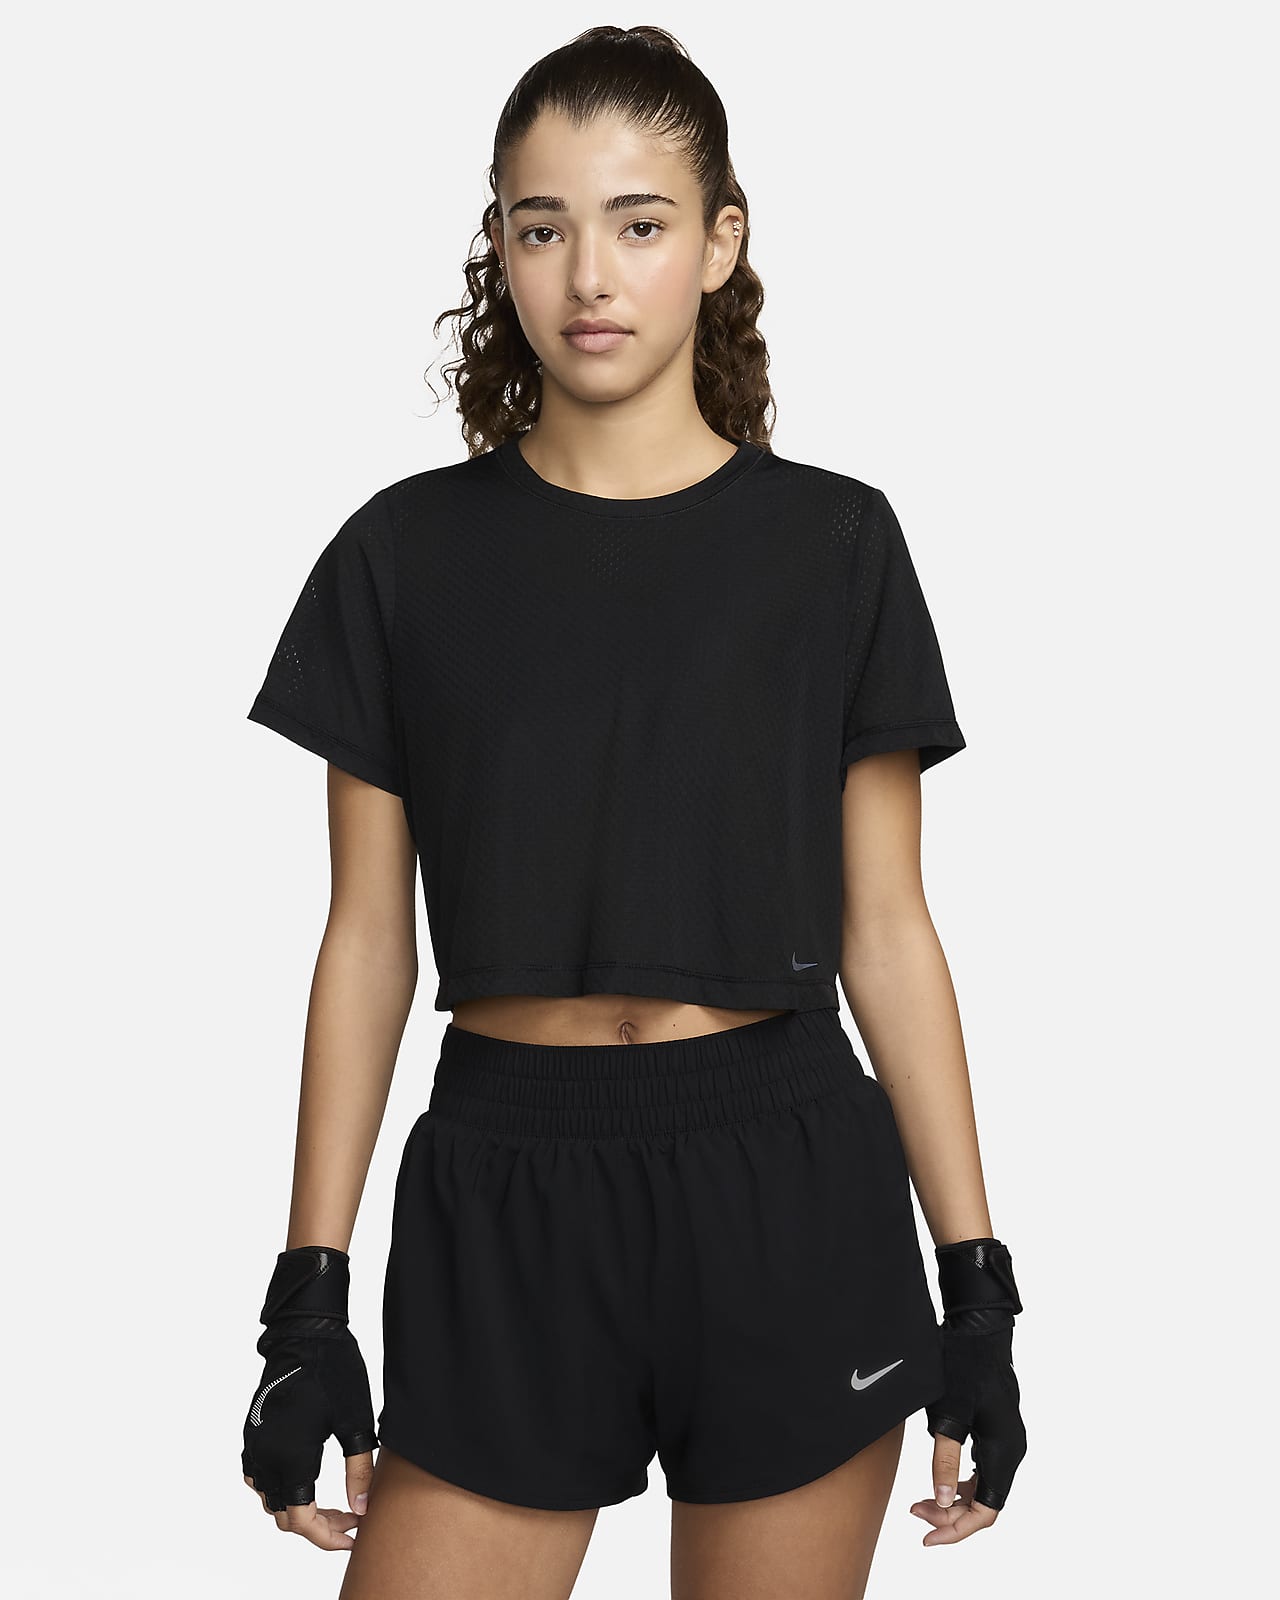 Nike One Classic Breathe Women's Dri-FIT Short-Sleeve Top